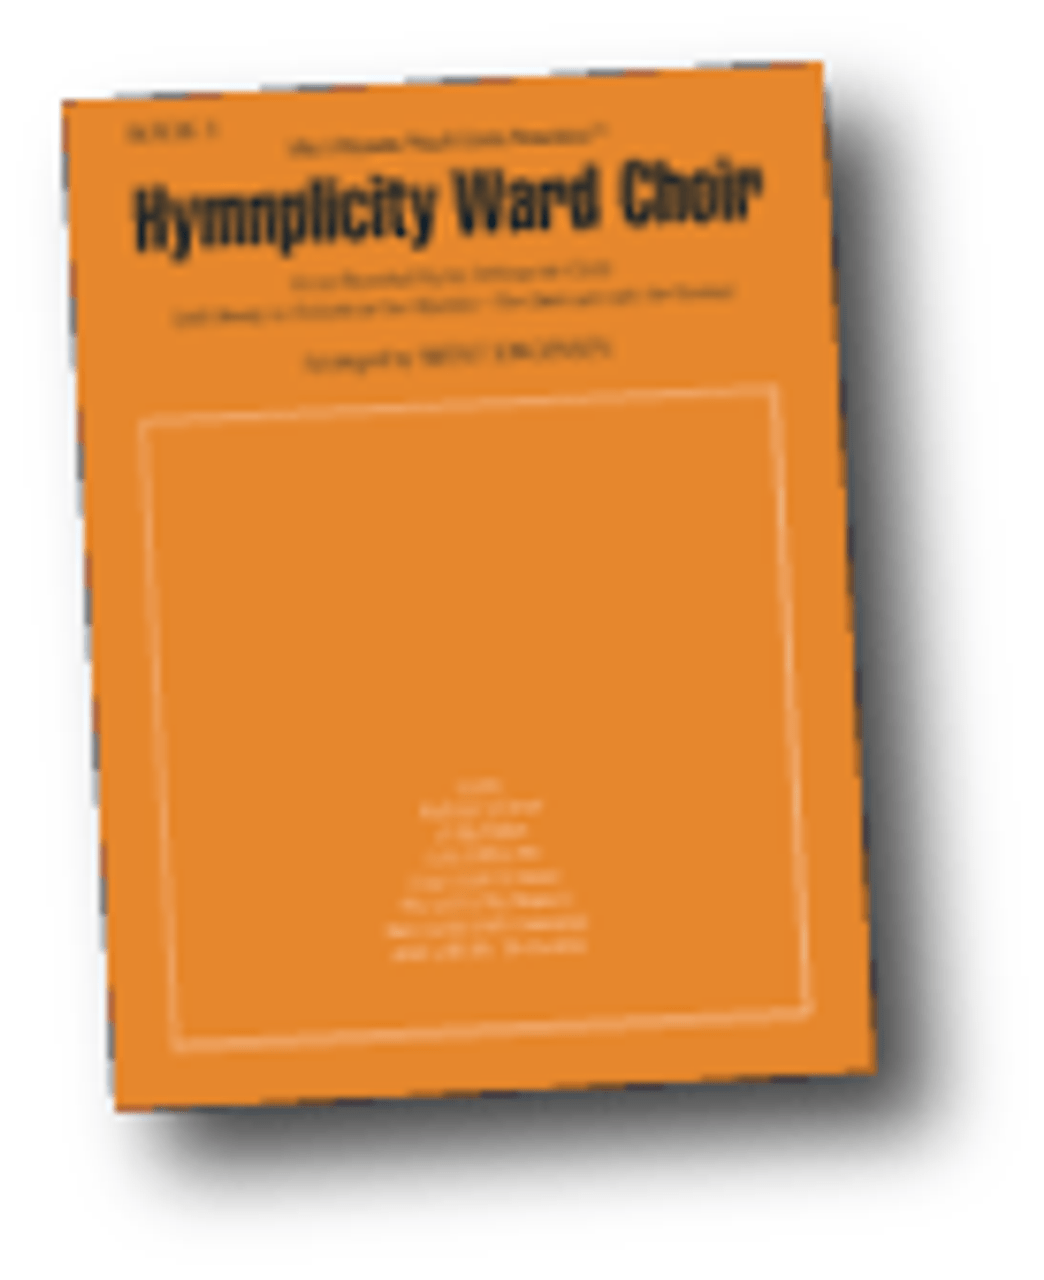 Hymnplicity Ward Choir - Book 5 *